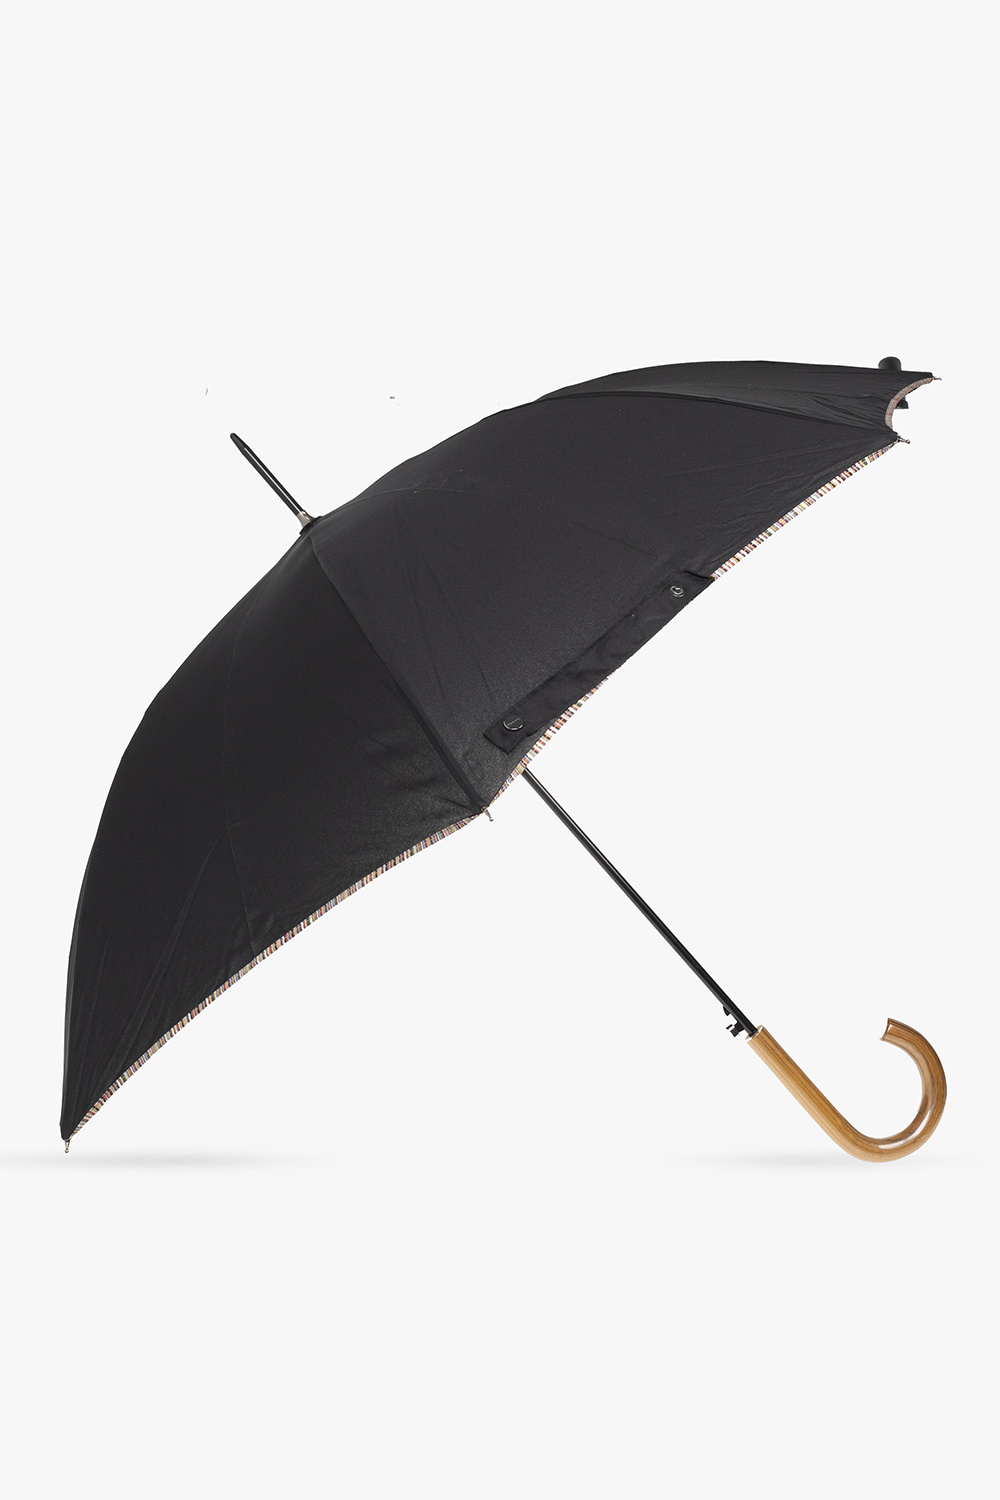 Paul Smith Walker umbrella